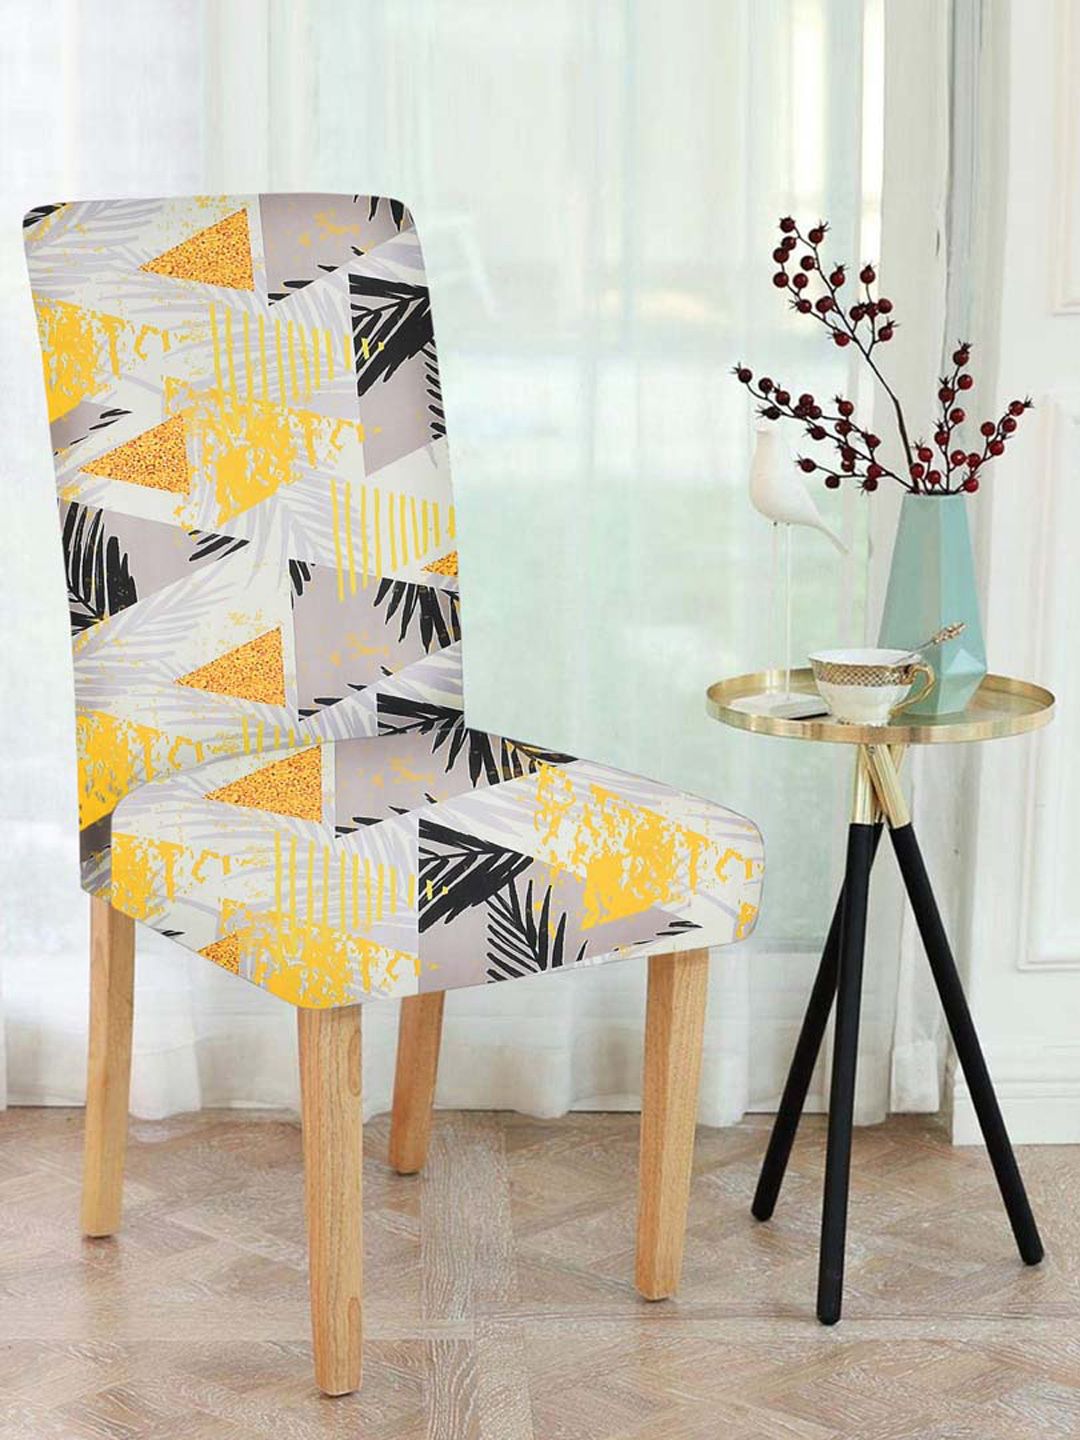 Slushy Mushy Set Of 6 White & Black Printed Chair Covers Price in India